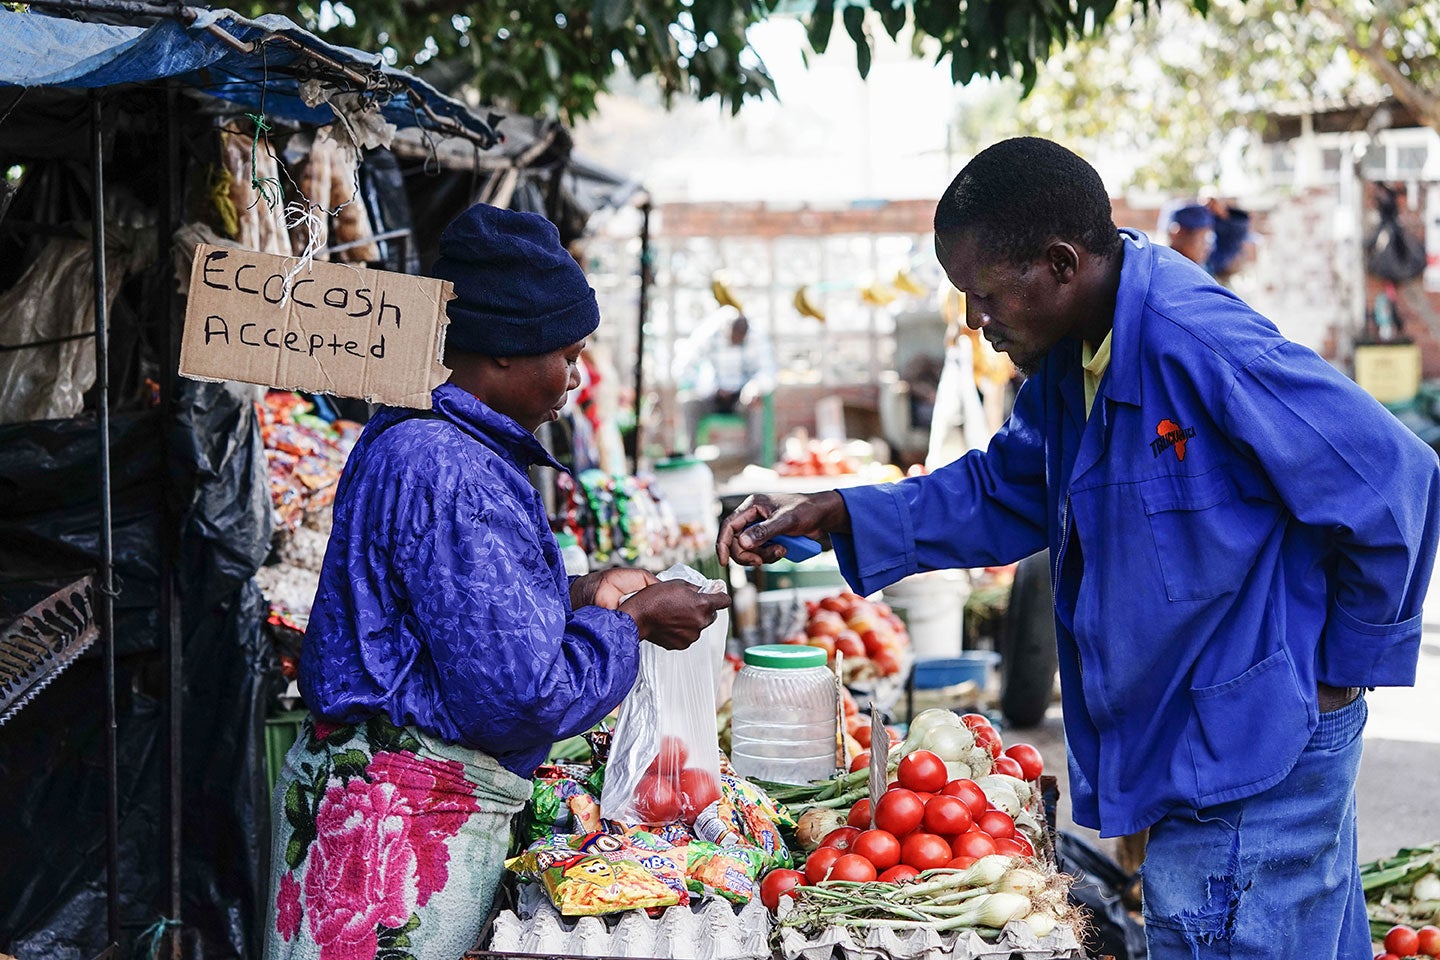 A customer buys tomatoes with mobile money in Zimbabwe. Photo: Zinyange Auntony, 2018 CGAP Photo Contest